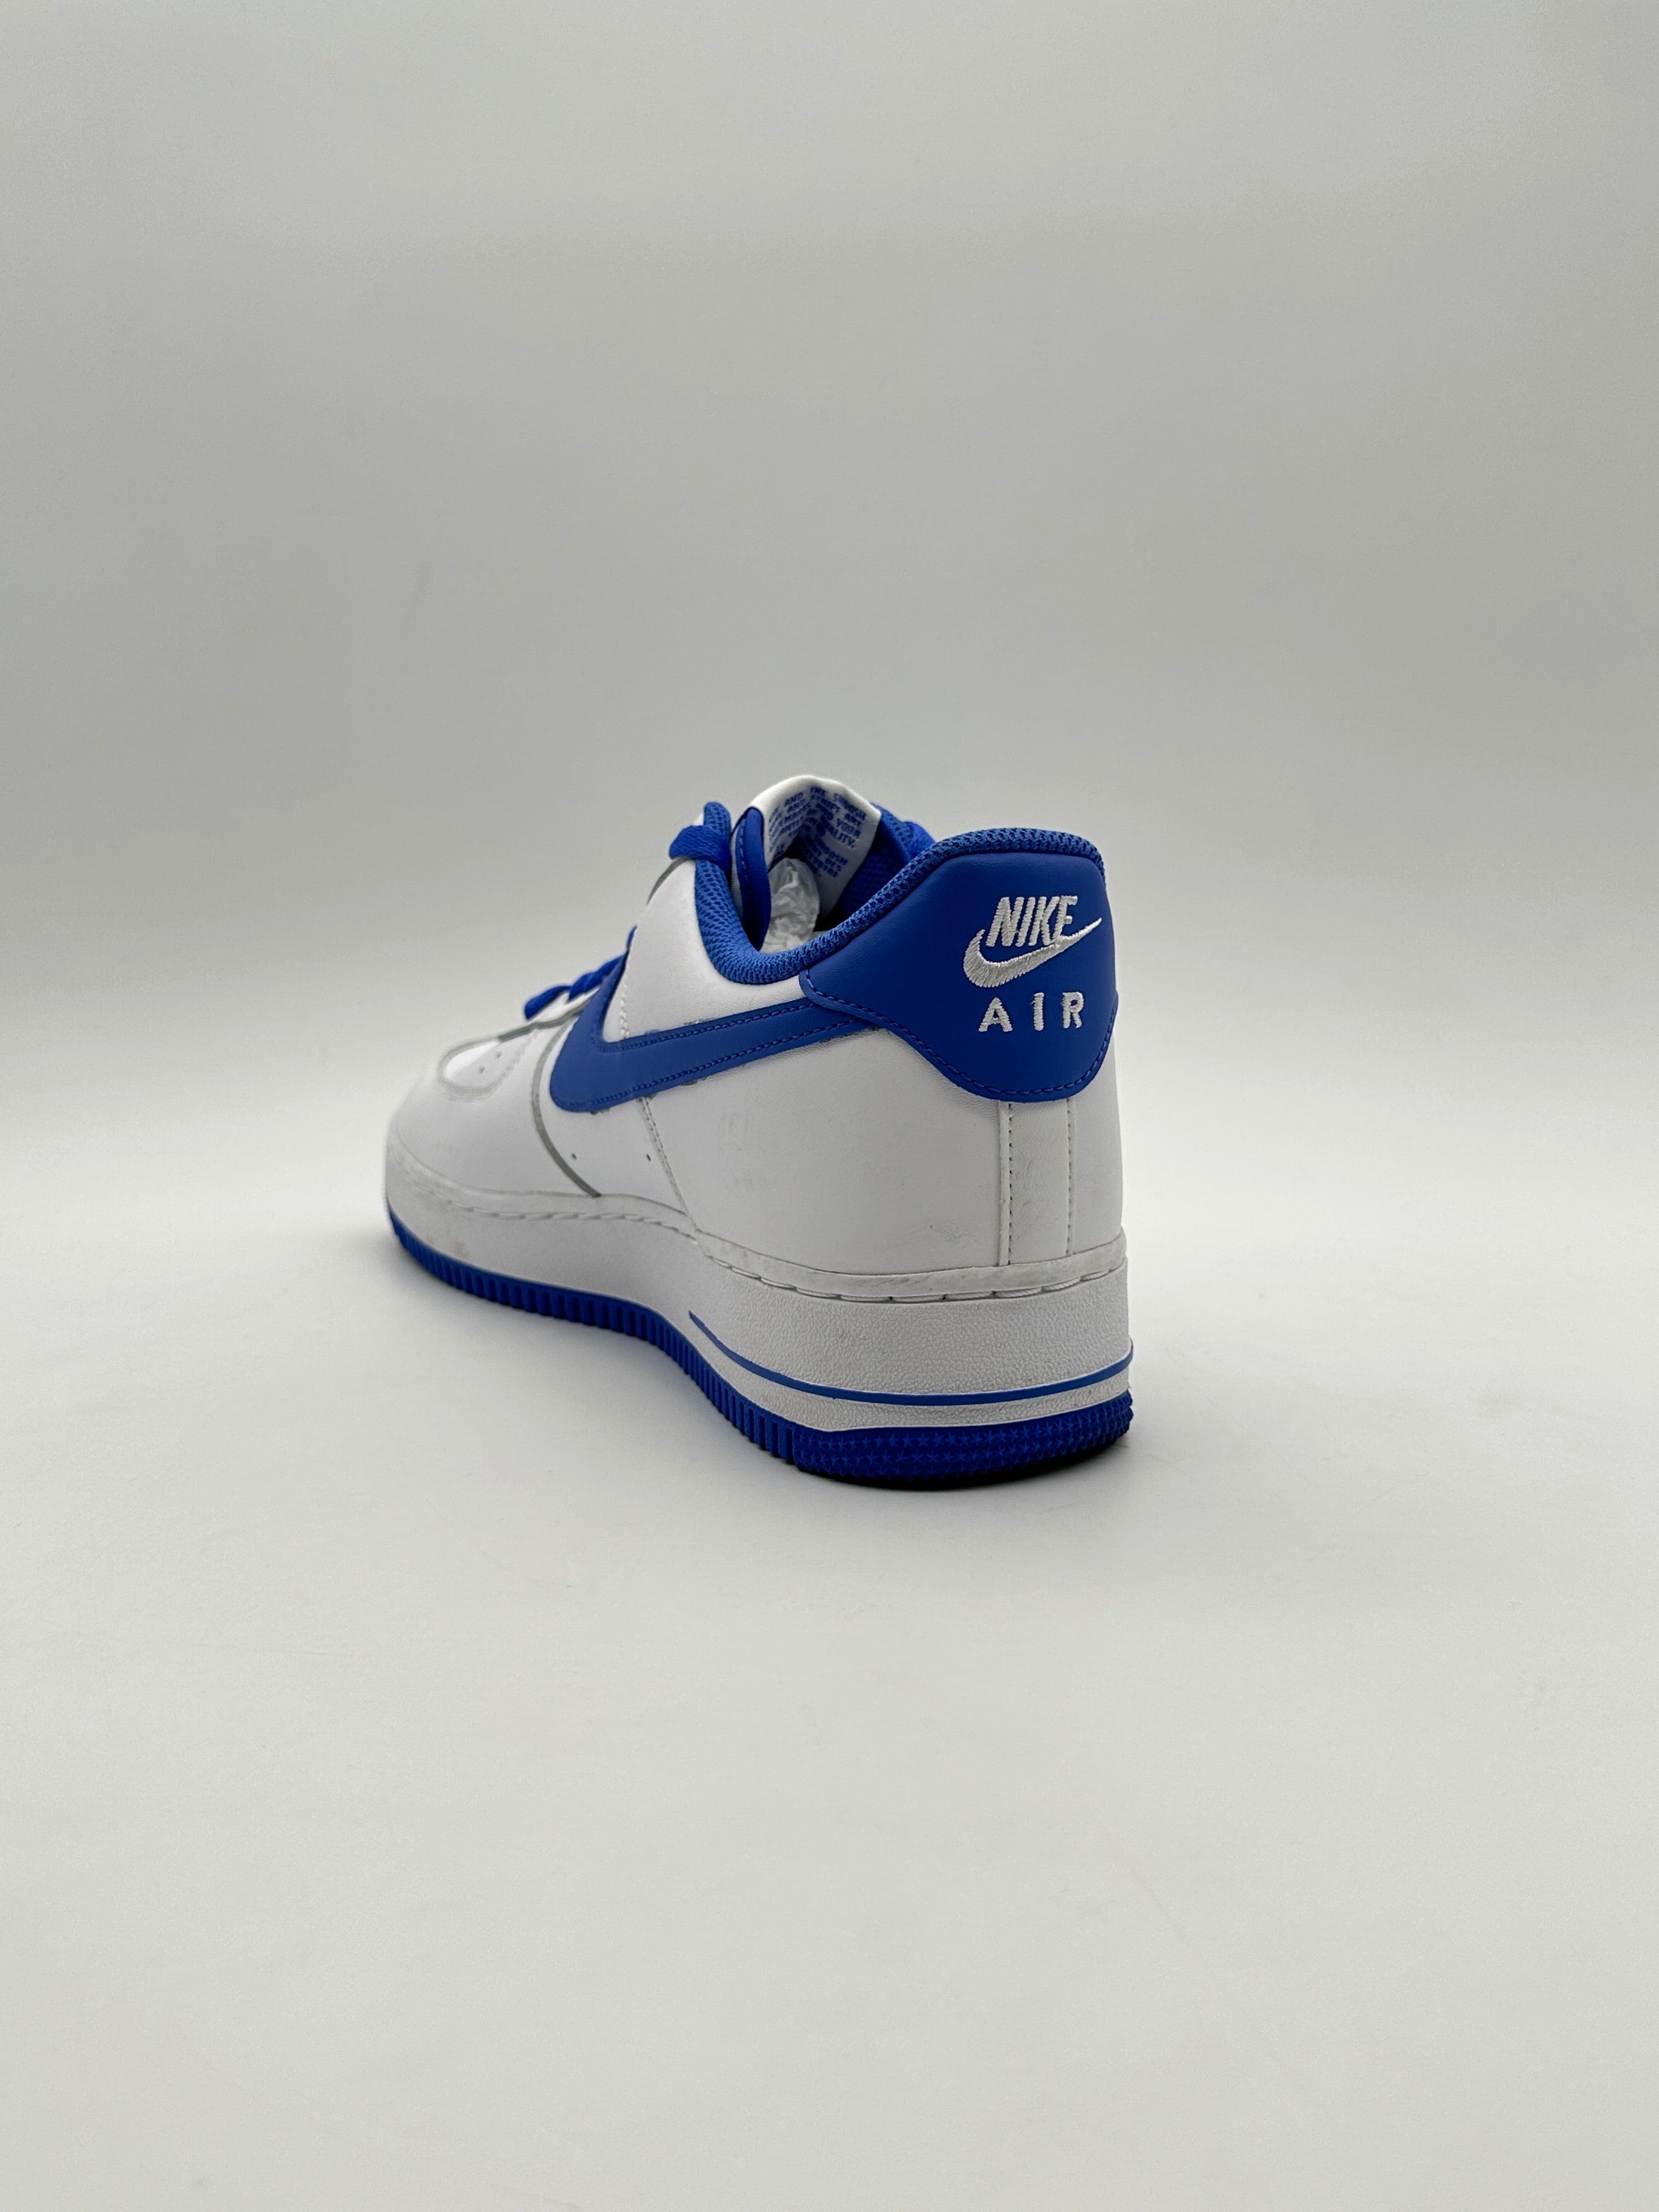 Air Force 1 Low Sneakers